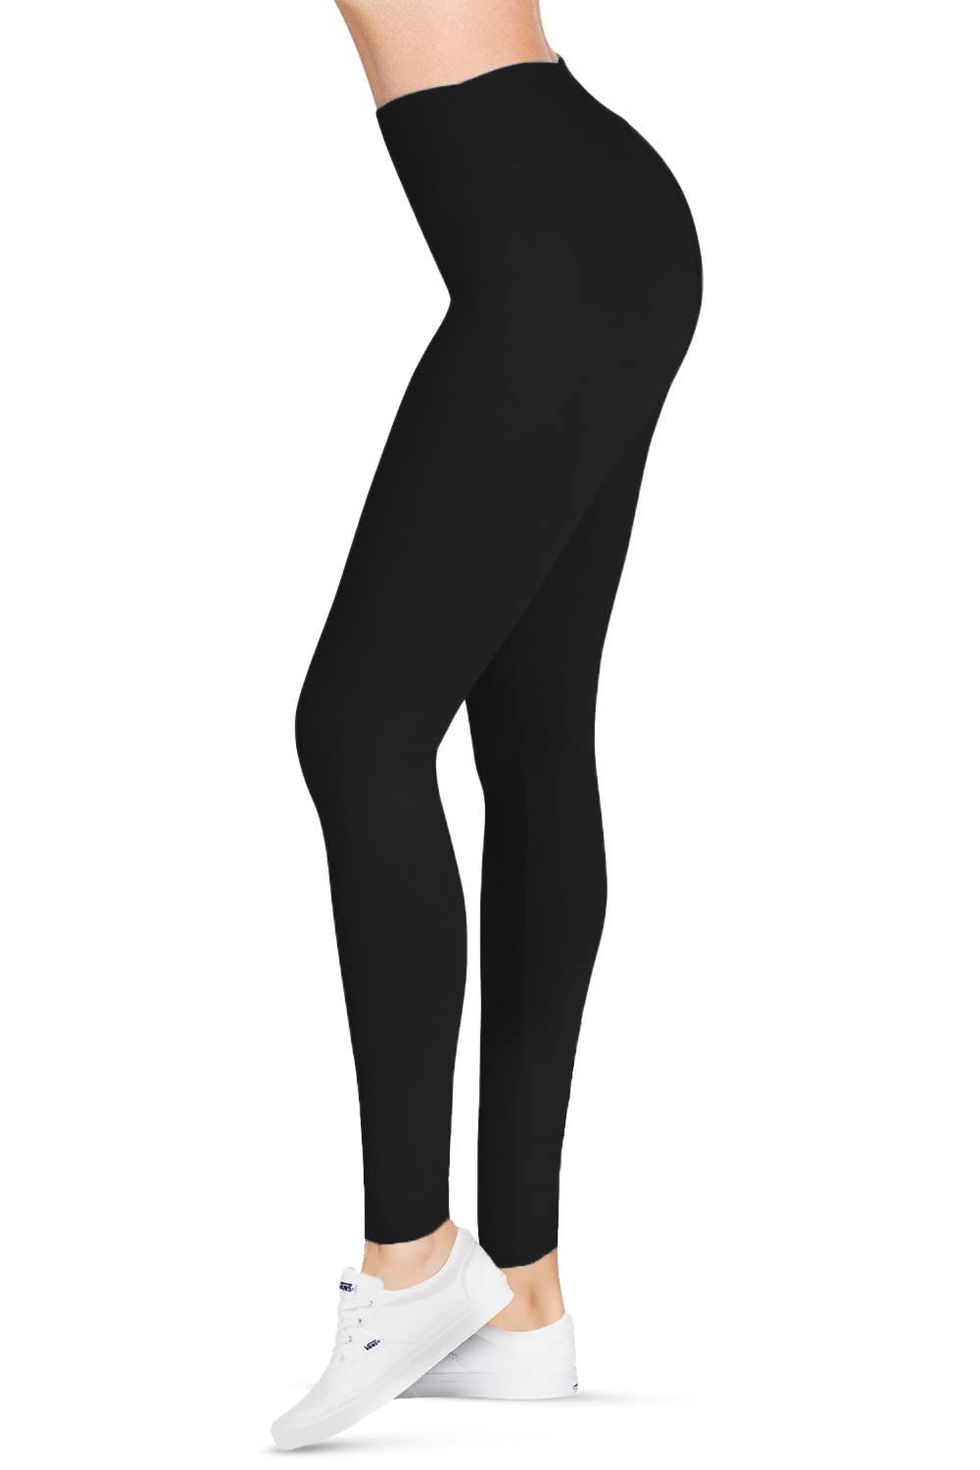 Women's High Waist Yoga Pants Tummy Control Leggings Workout Running Butt  Lift Tights - China Buttery Soft Biker Shorts and High Waisted Yoga Short  price